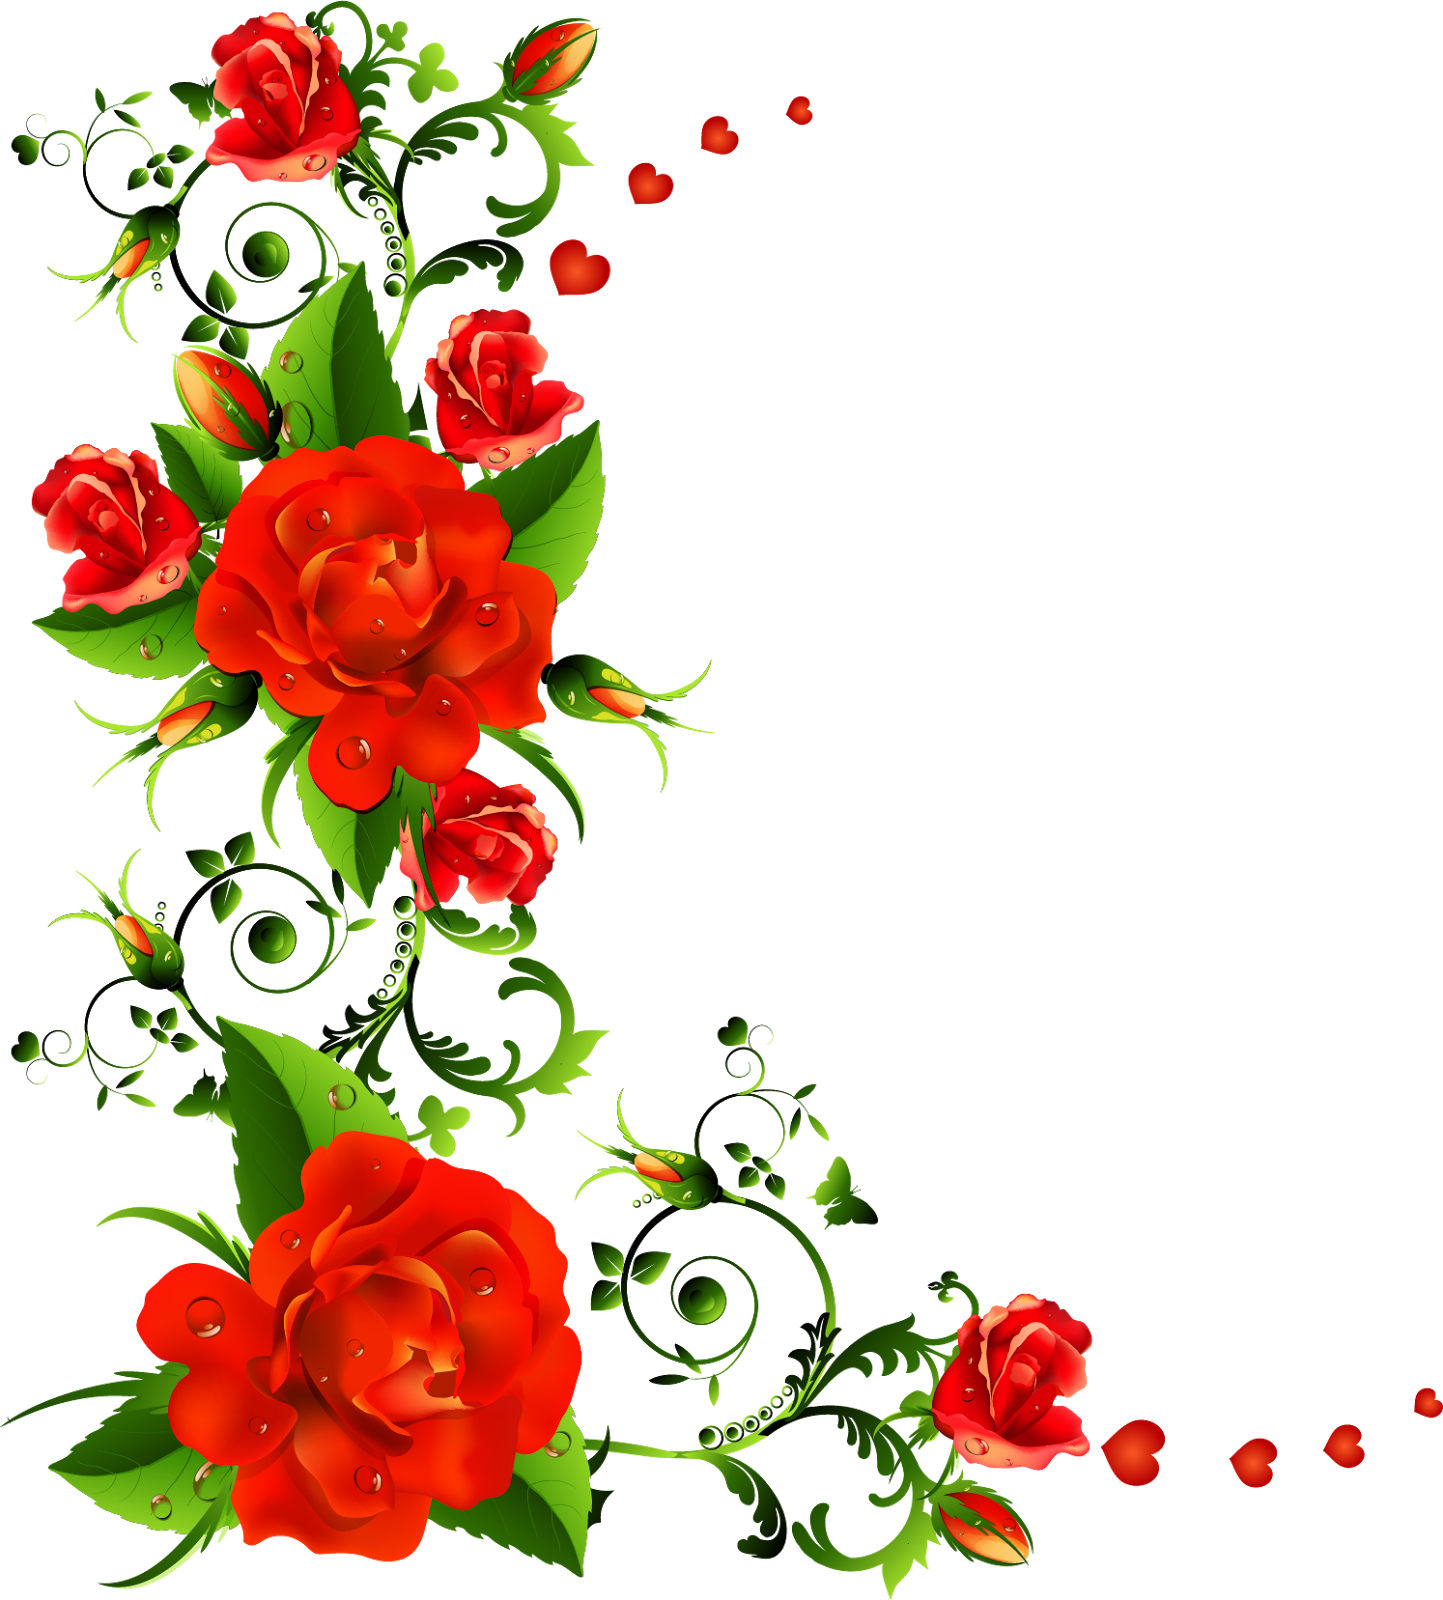 rose-flower-border-designs-images-and-photos-finder